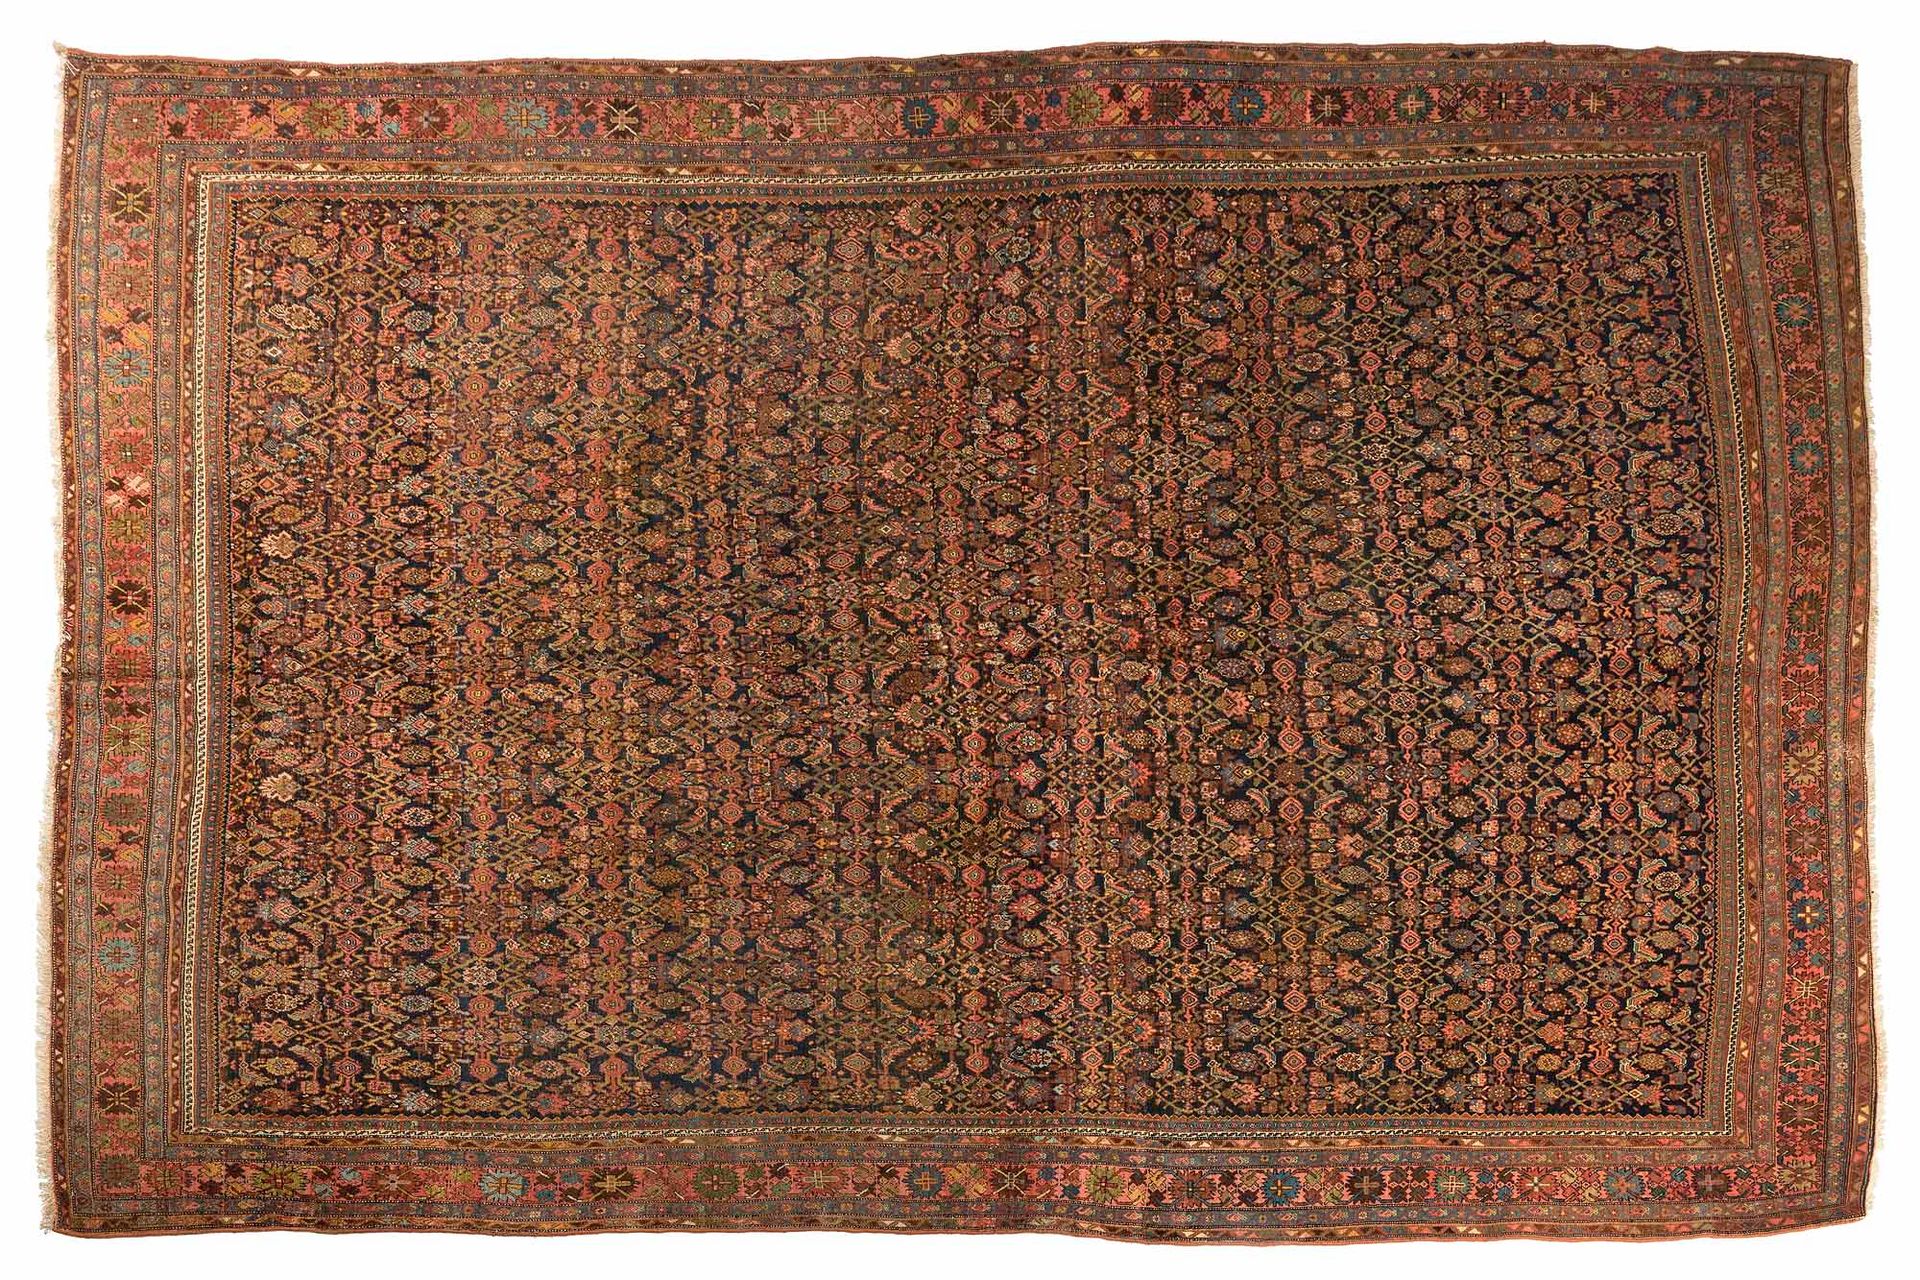 Null BIDJAR carpet (Persia), end of the 19th century

Dimensions : 380 x 270cm.
&hellip;